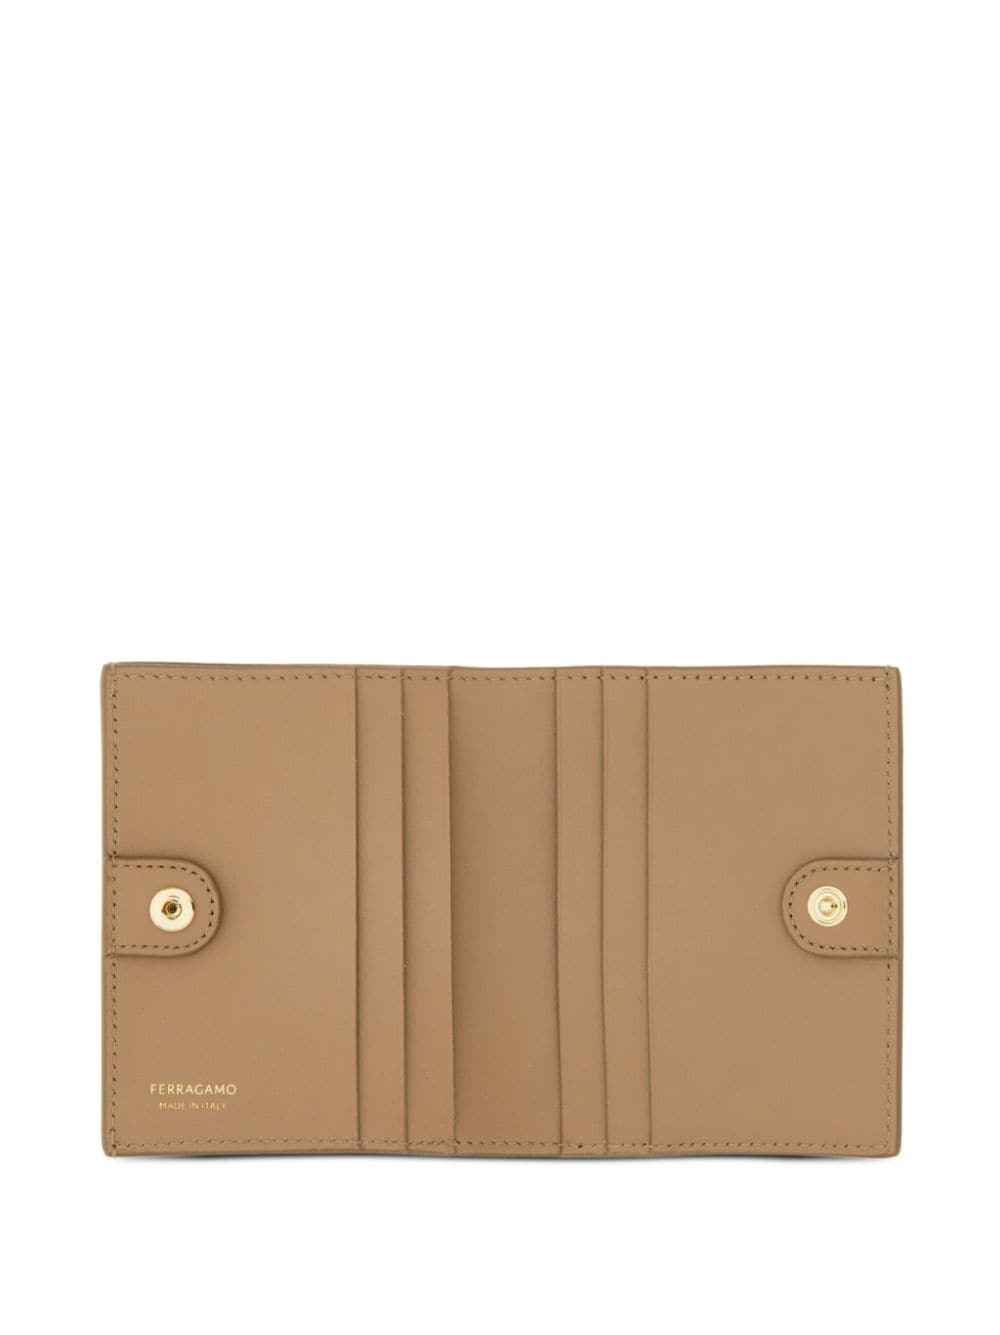 Gancini-buckle leather wallet - 5